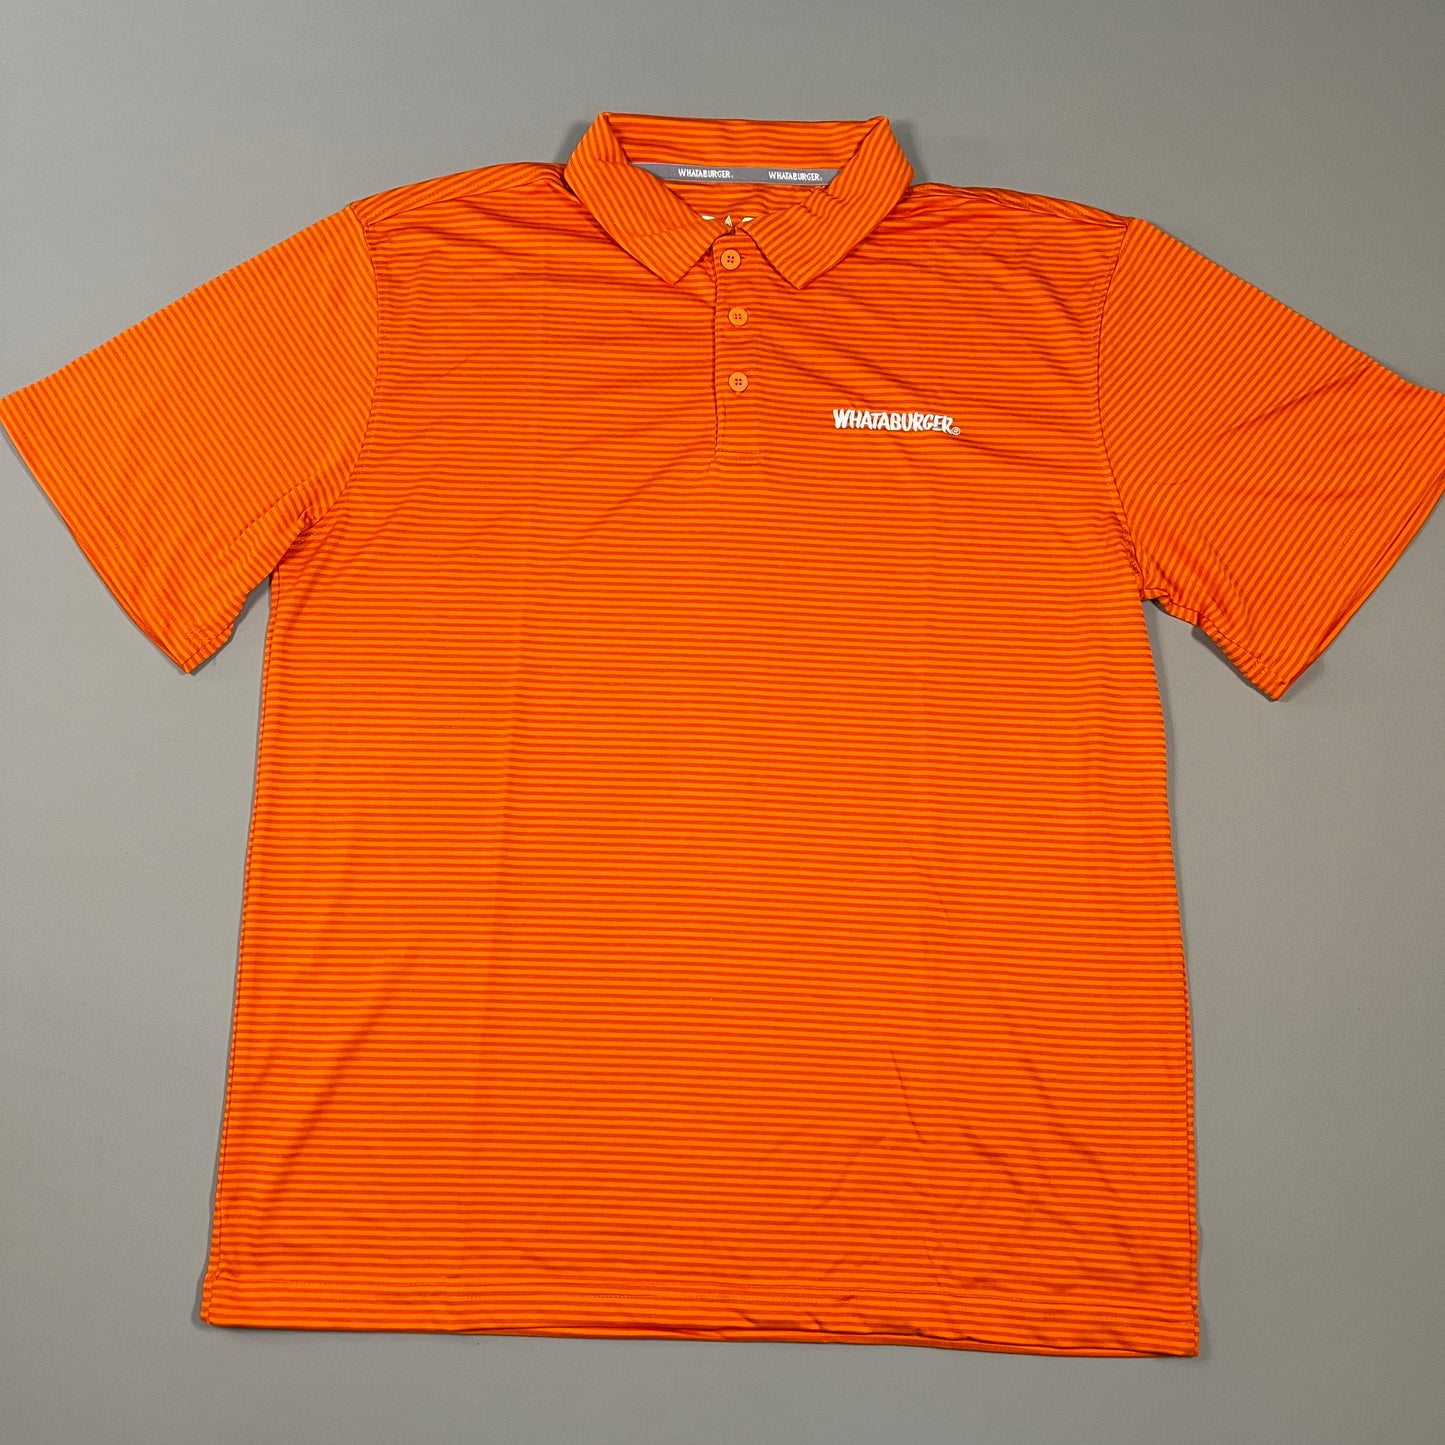 WHATABURGER Uniform Crew Polo Stripe Shirt Unisex Sz L Orange 74062 (New Other)